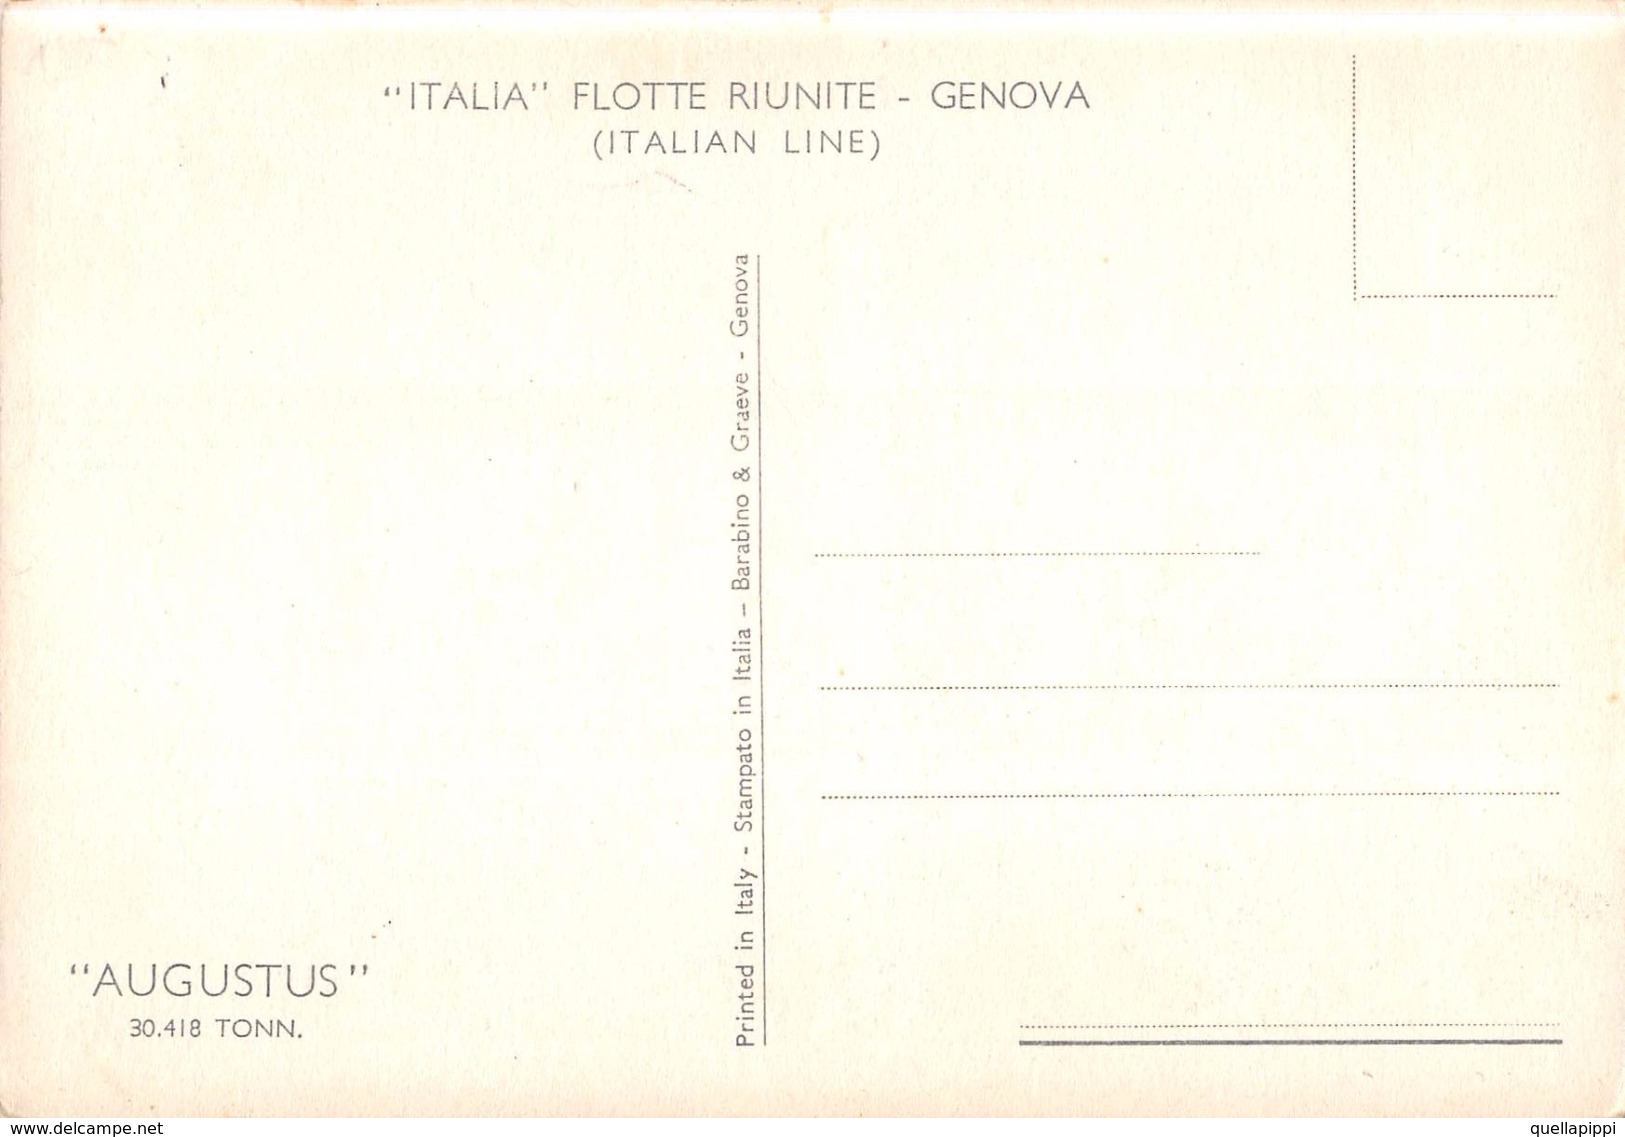 05422 "MOTONAVE AUGUSTUS 30418 TONN - ITALIA FLOTTE RIUNITE - GENOVA"  CART NON SPED - Banques